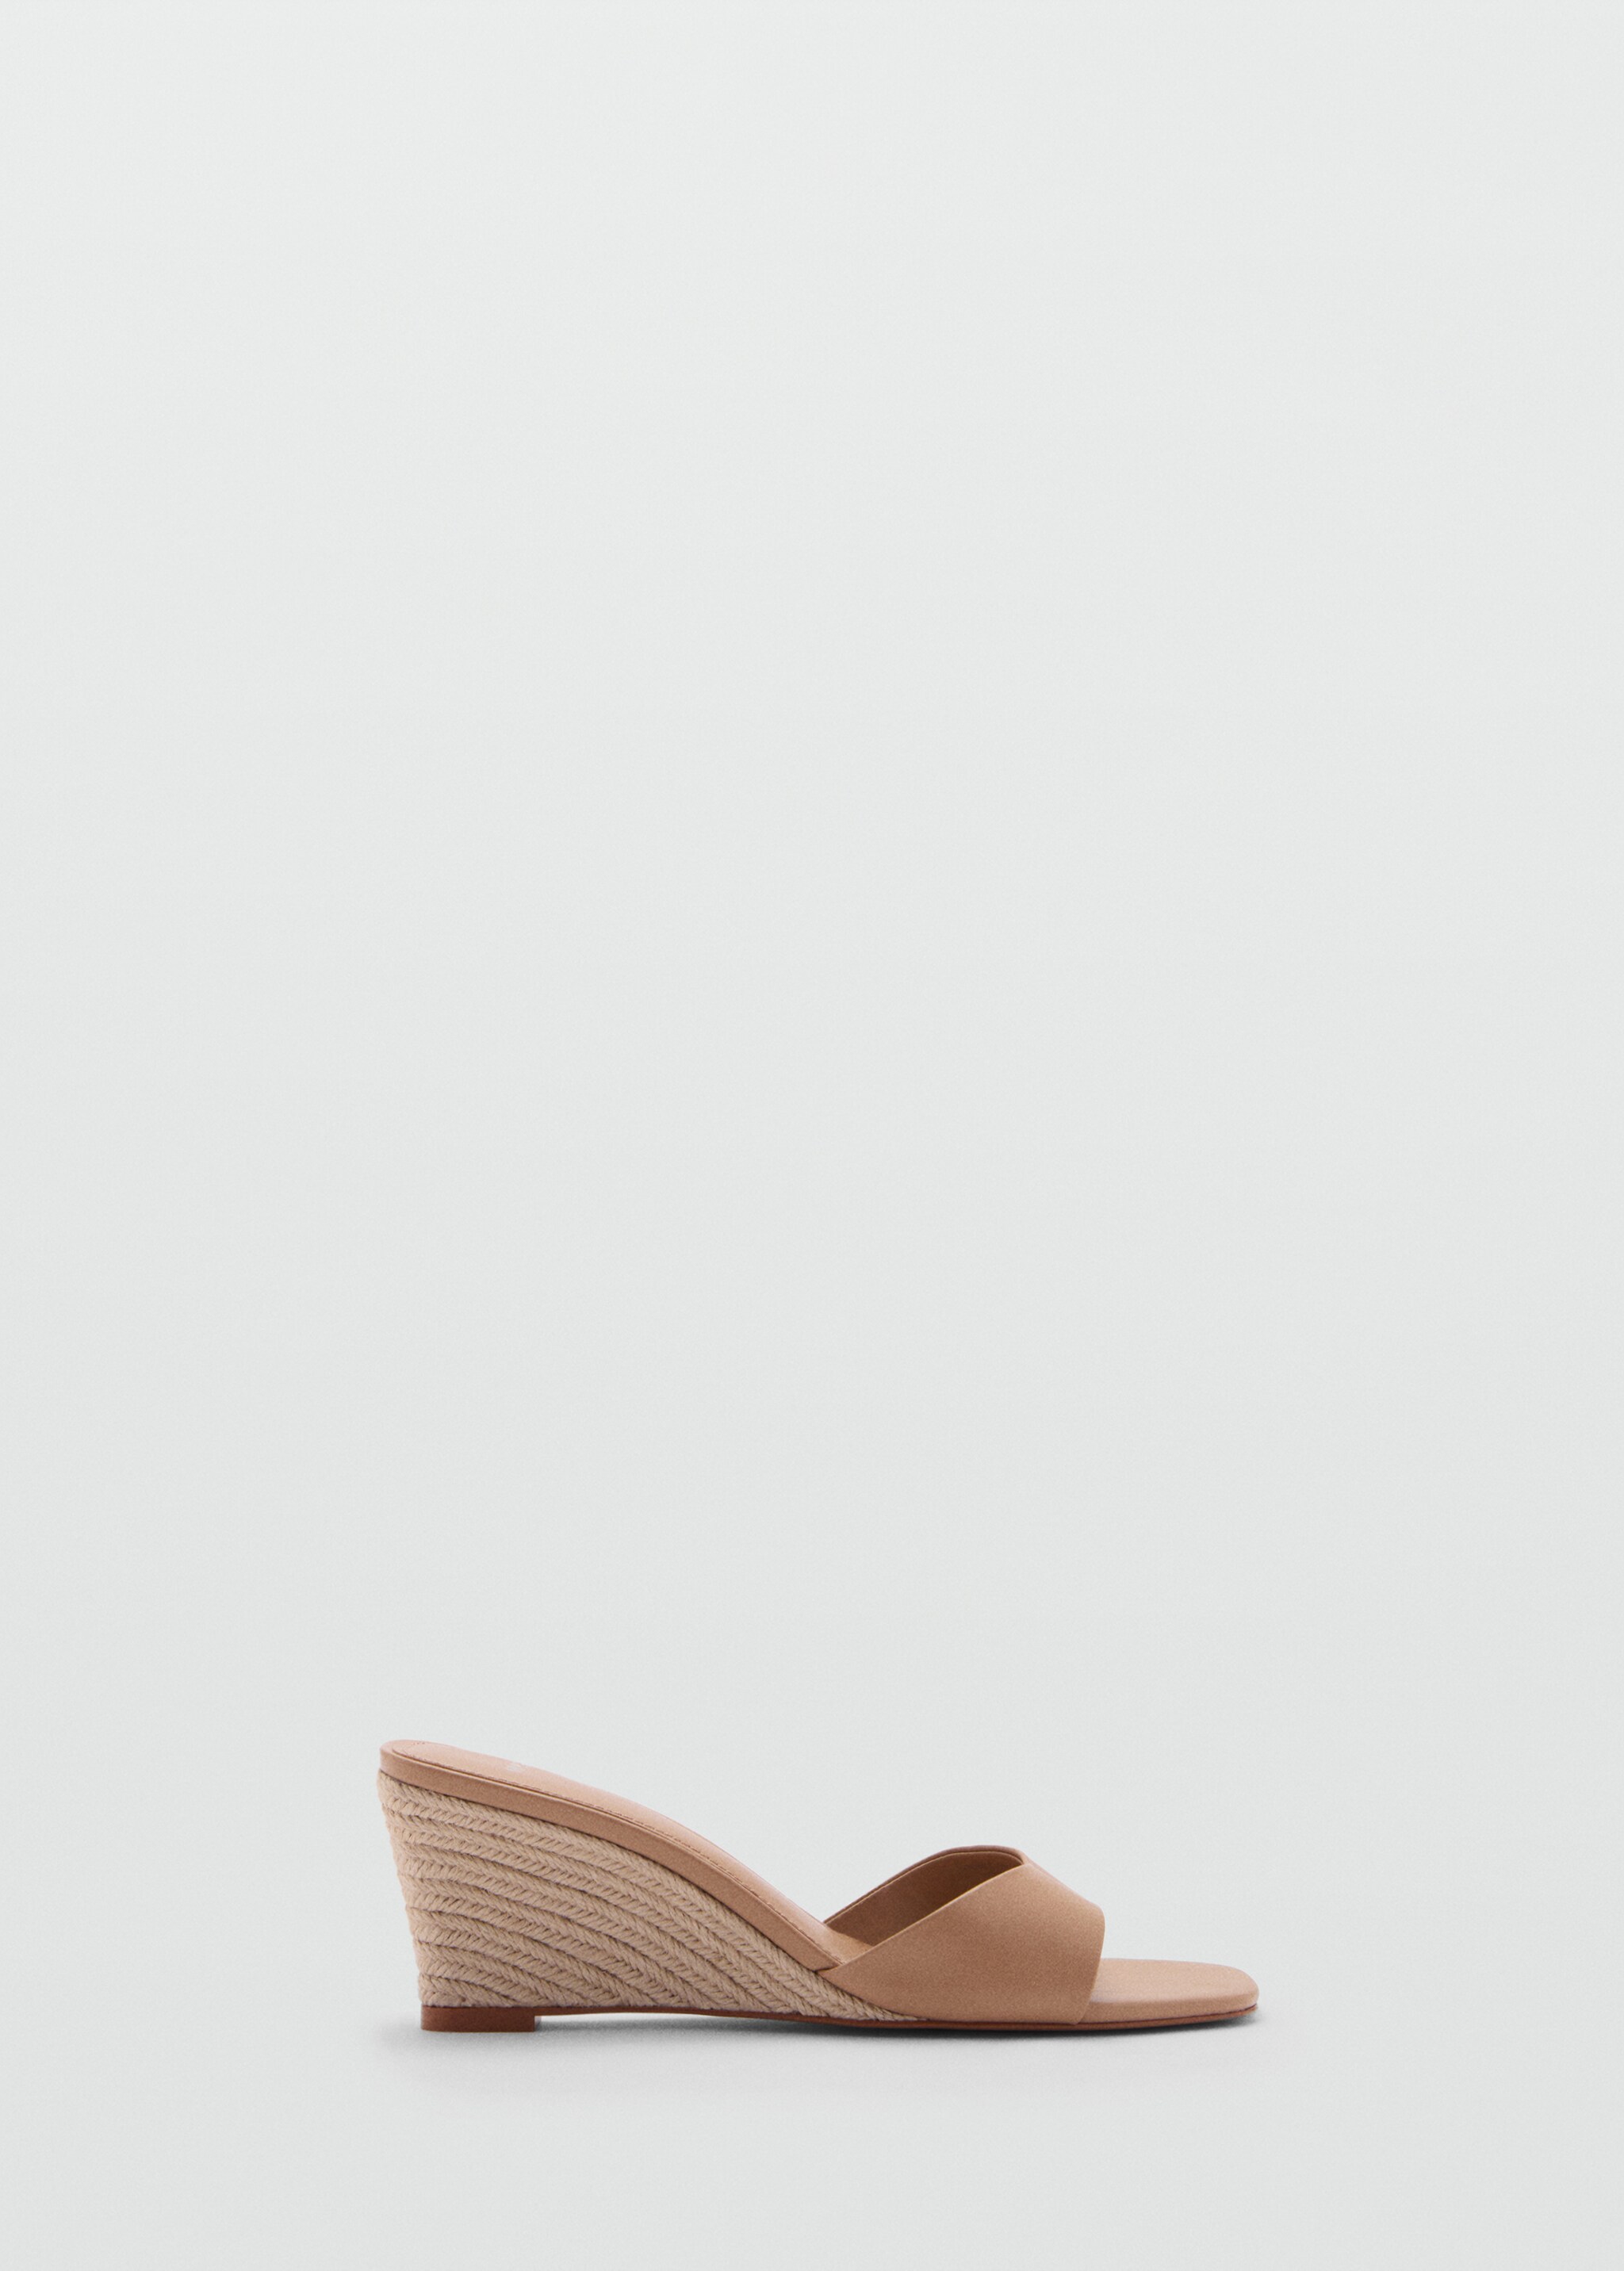 Wedge-heel sandal - Изделие без модели